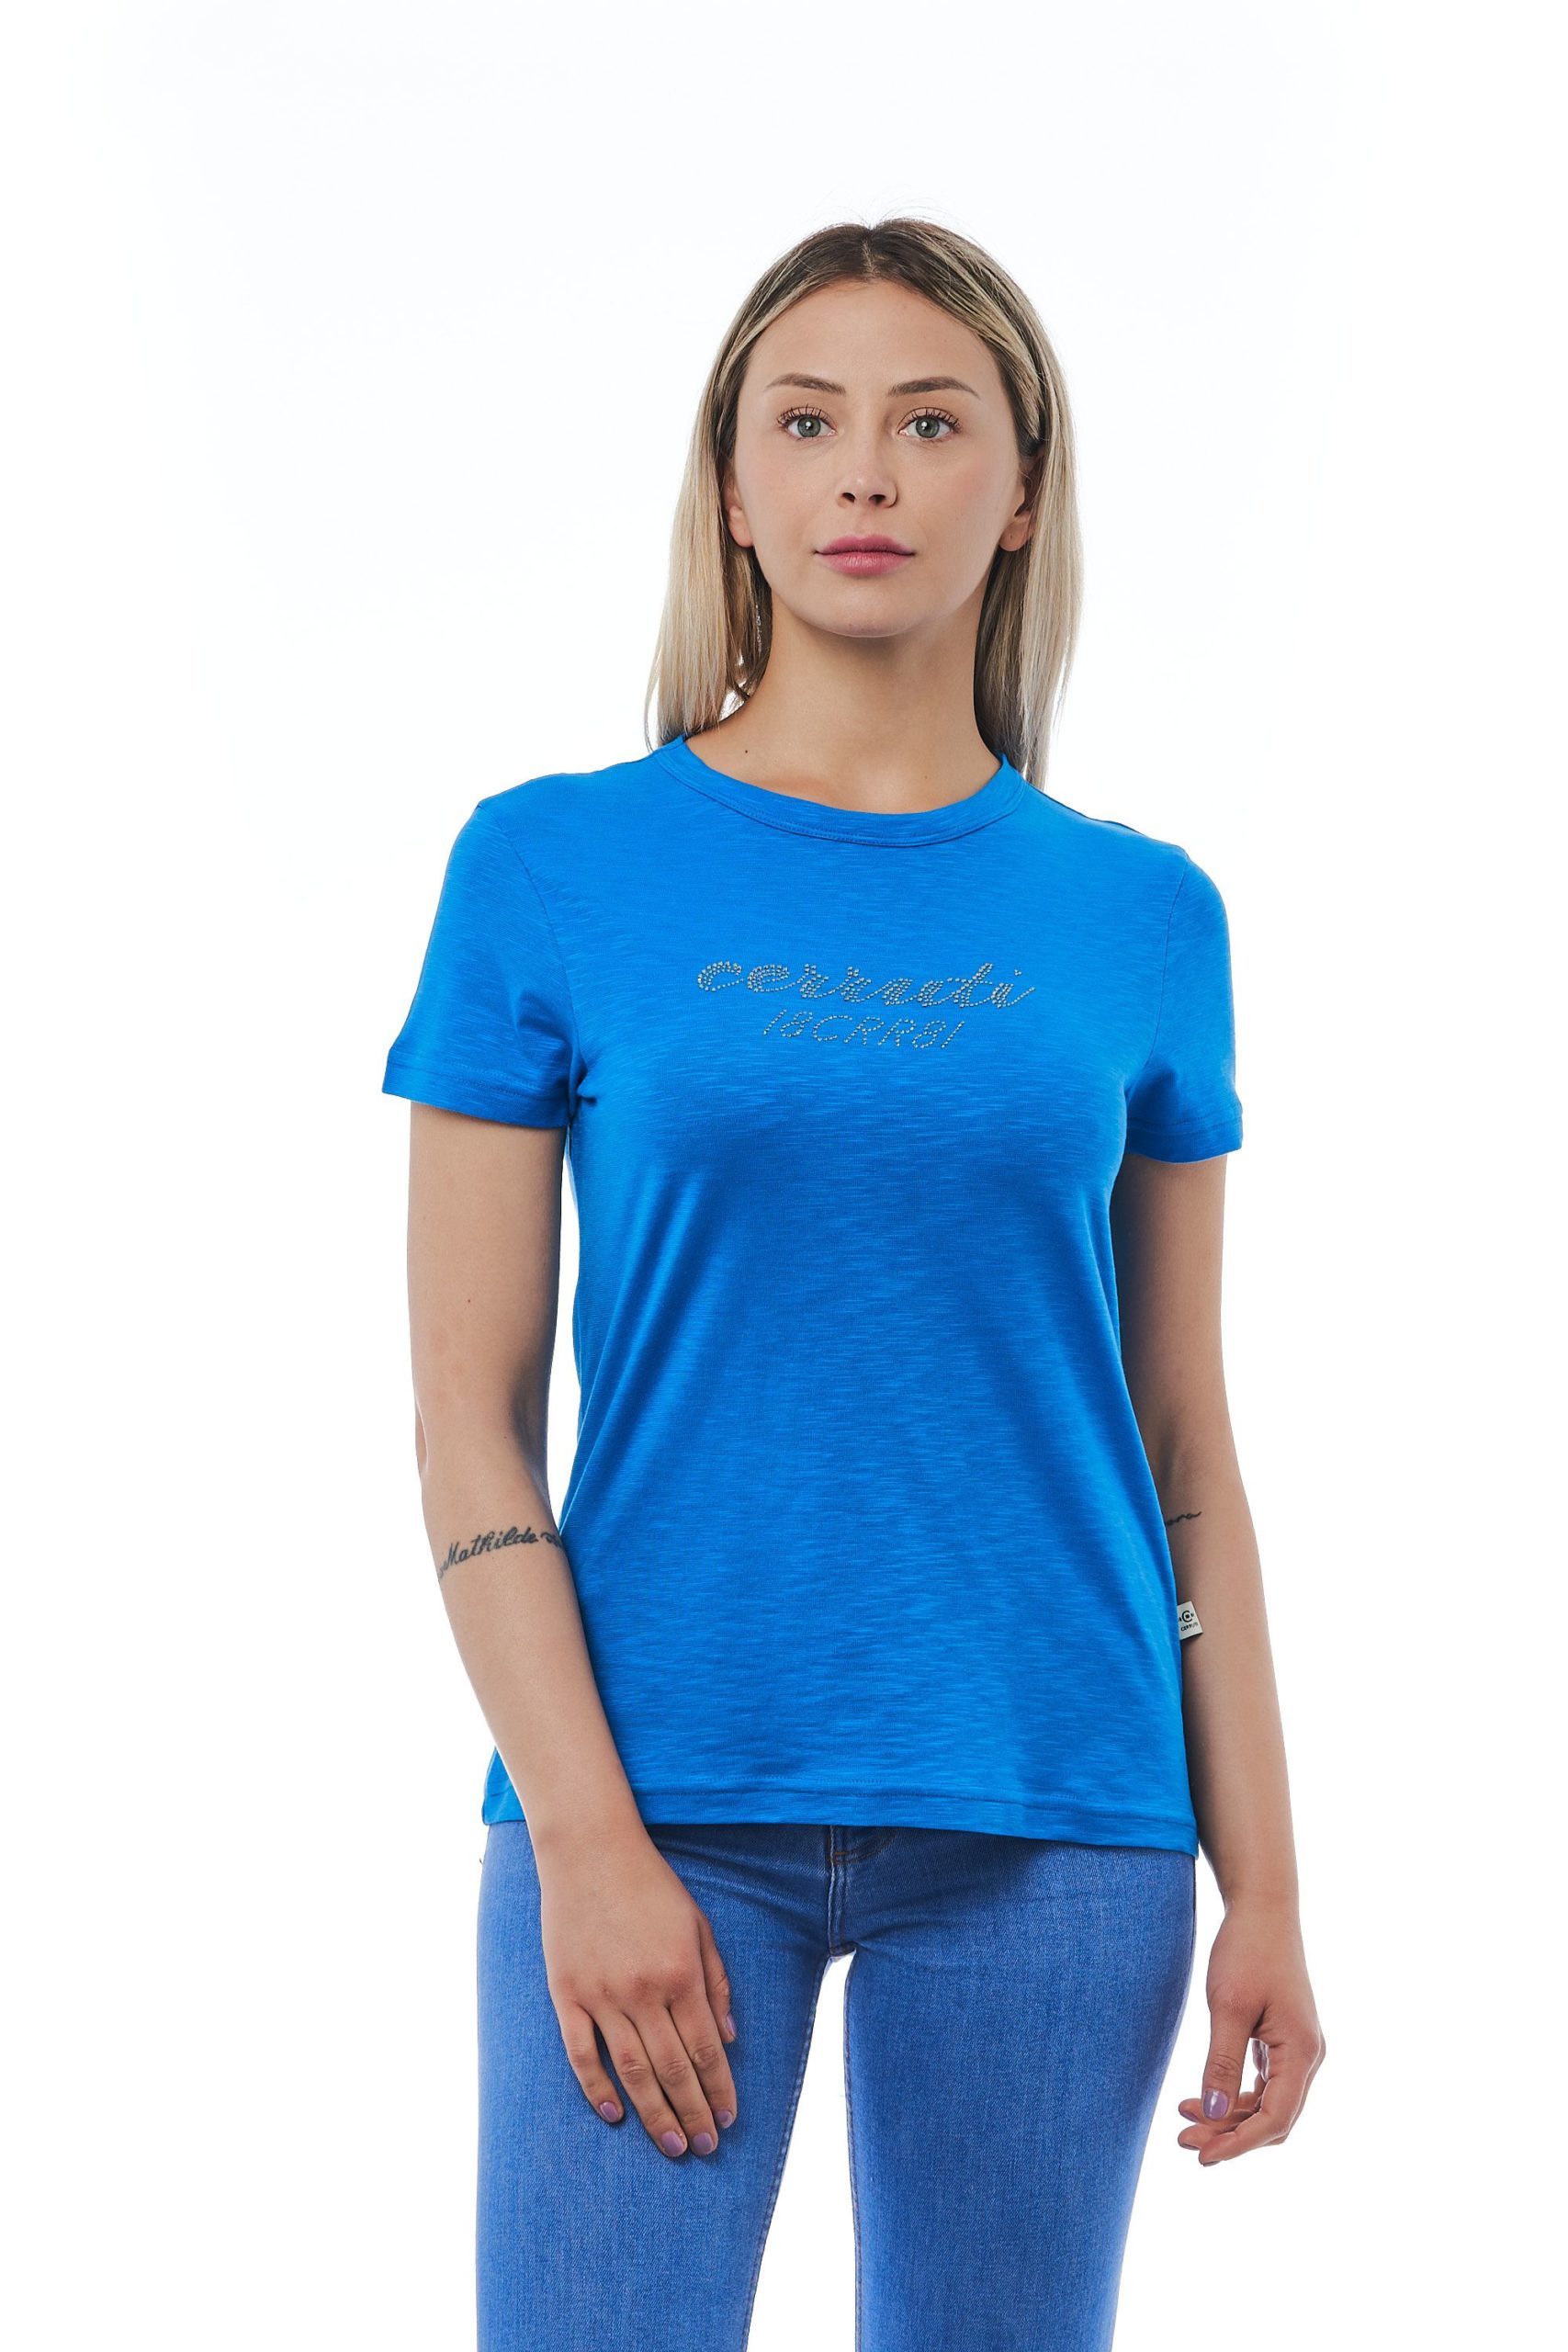 Cerruti 1881 Women's Azzurro T-Shirt Light Blue CE1410229 - M